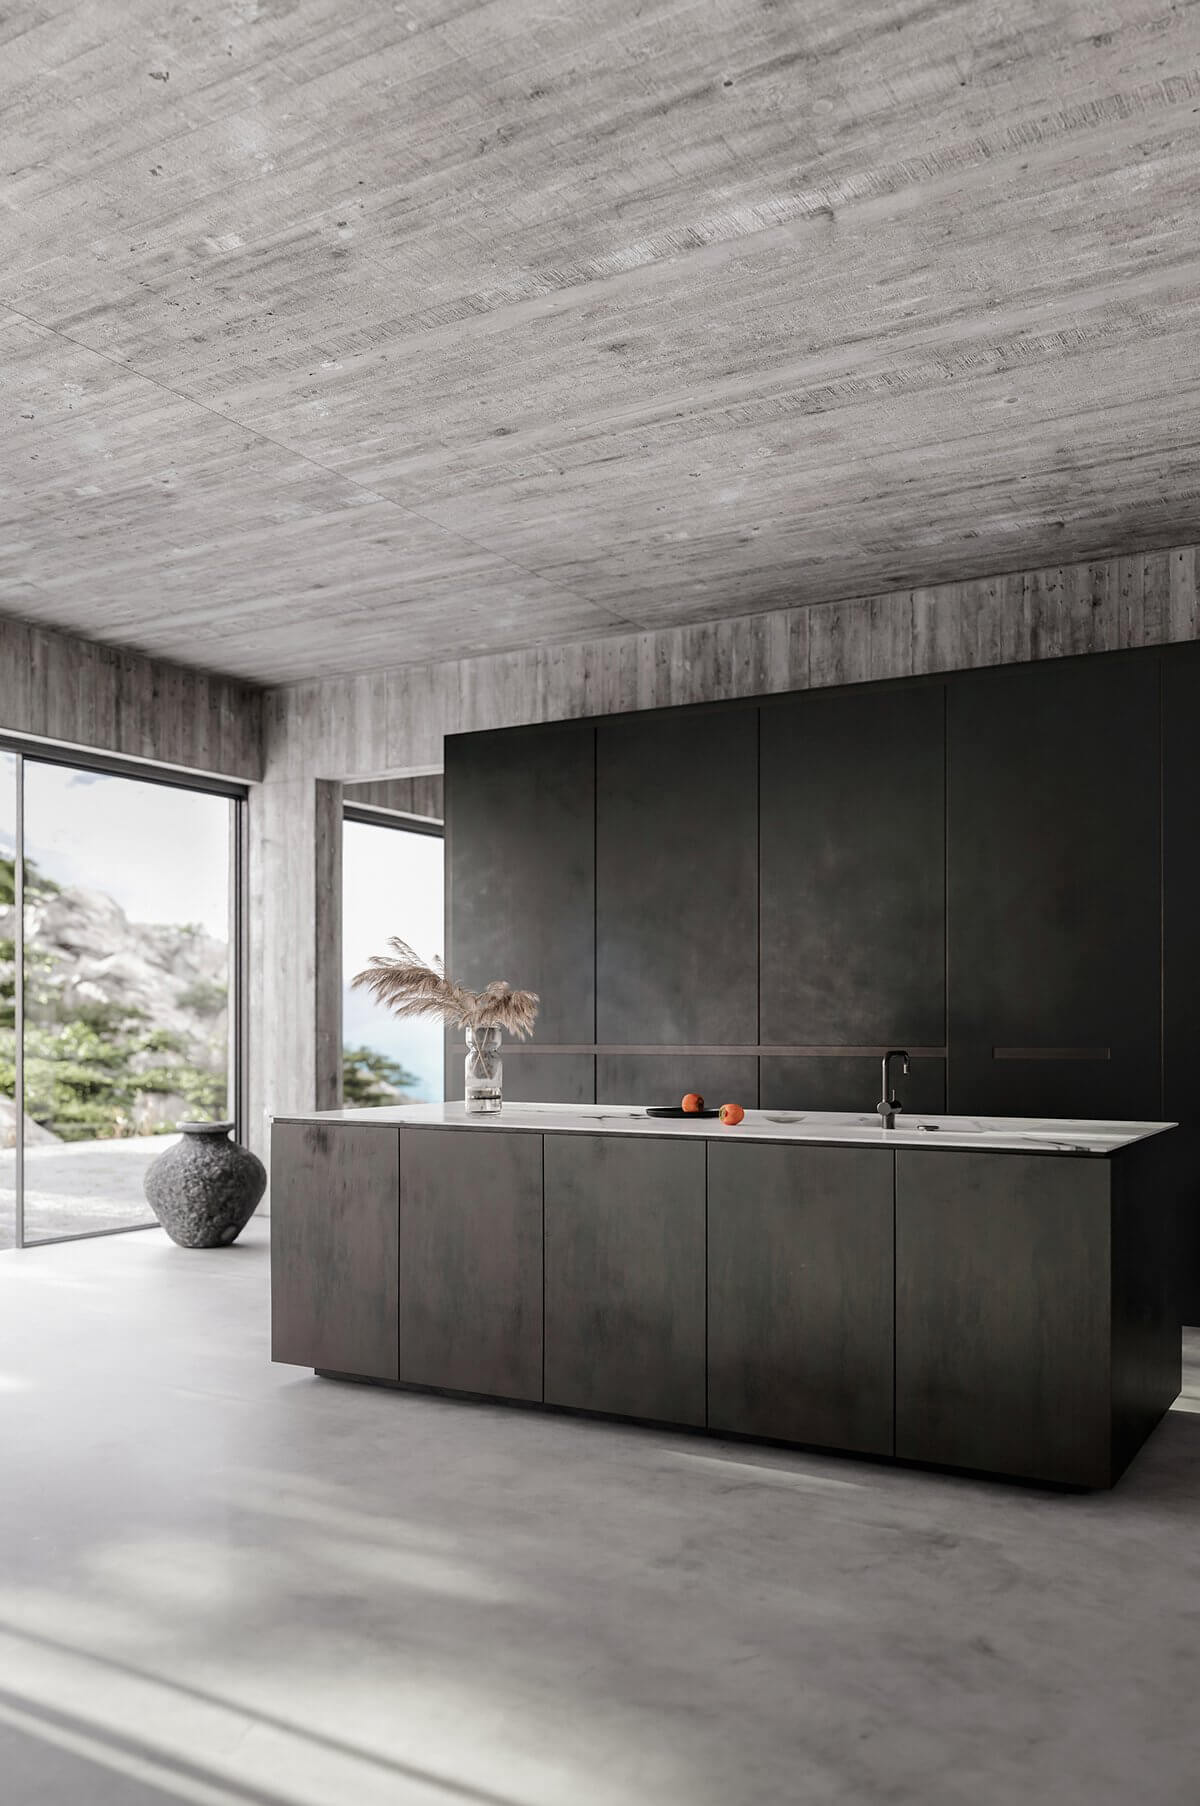 In praise of shadows house kitchen block design marble dark concrete - cgi visualizations